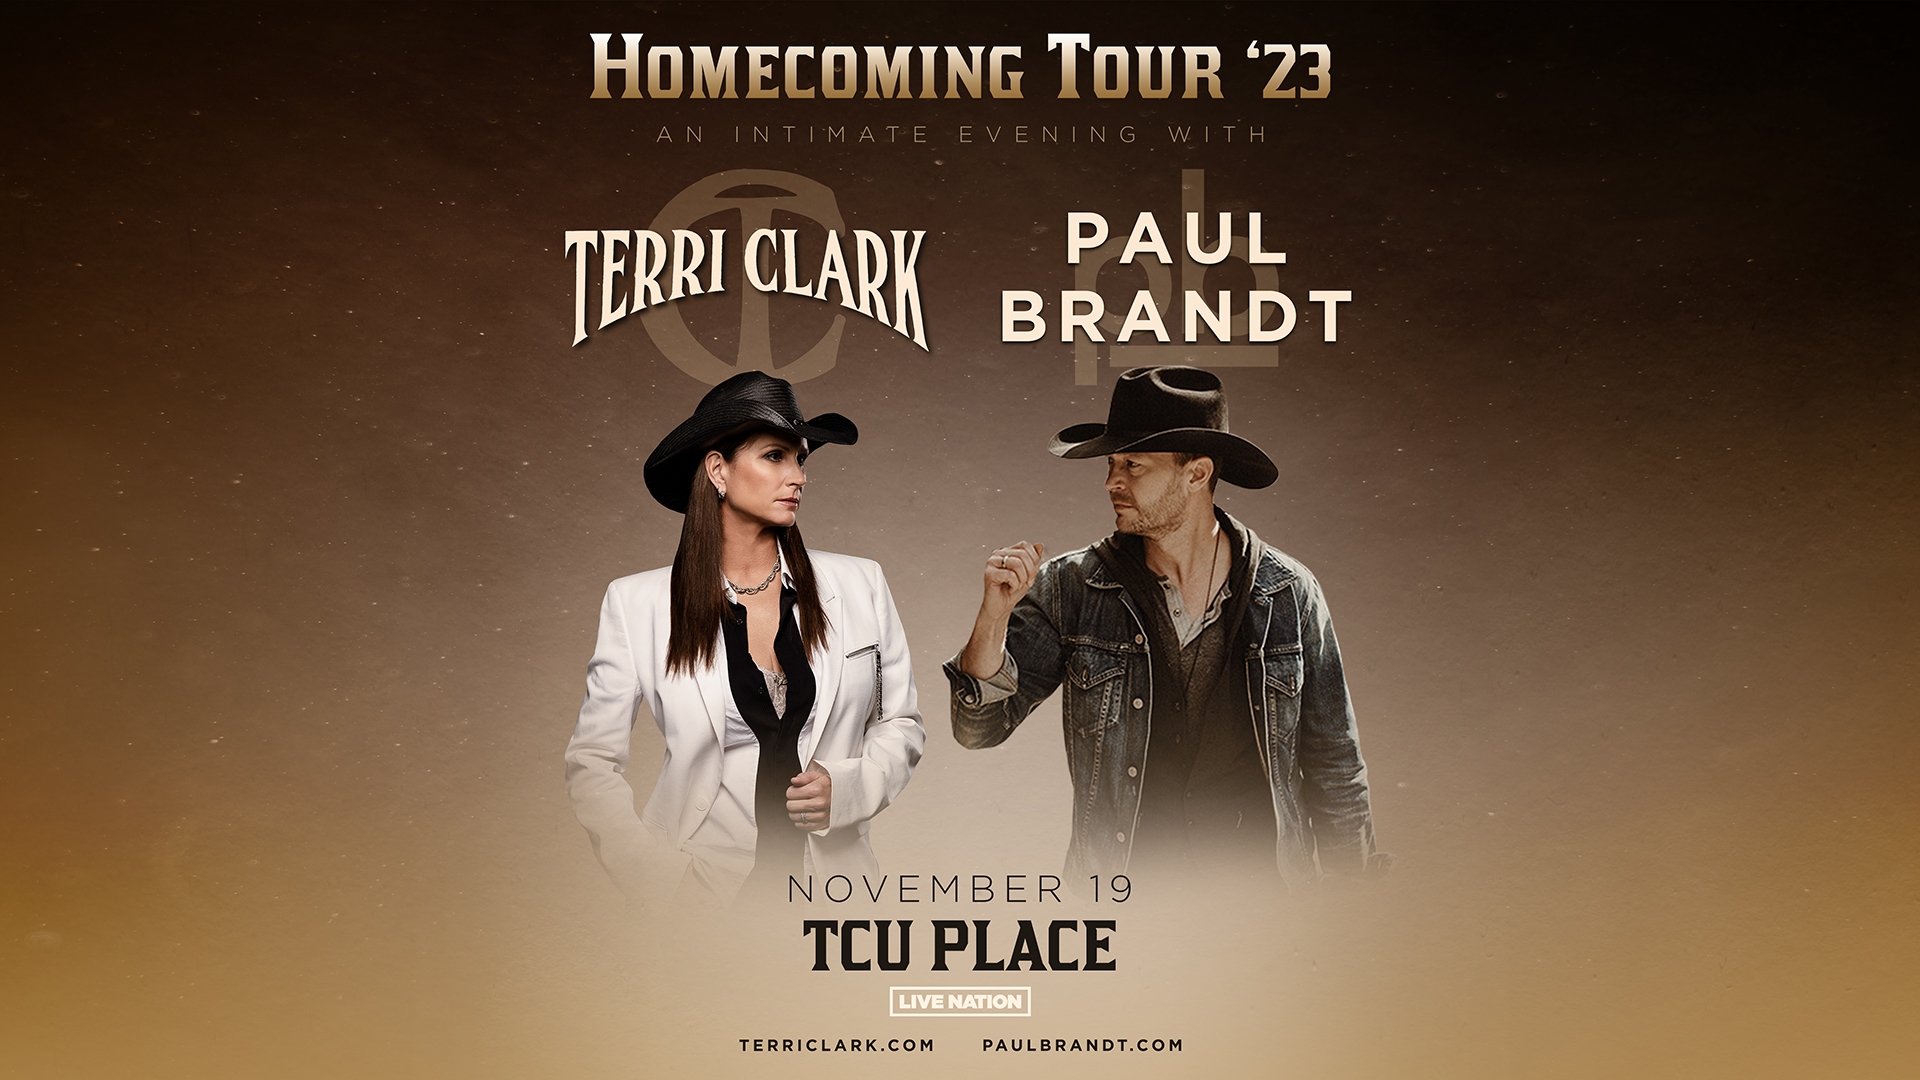 Terri Clark and Paul Brandt - November 19th at TCU Place